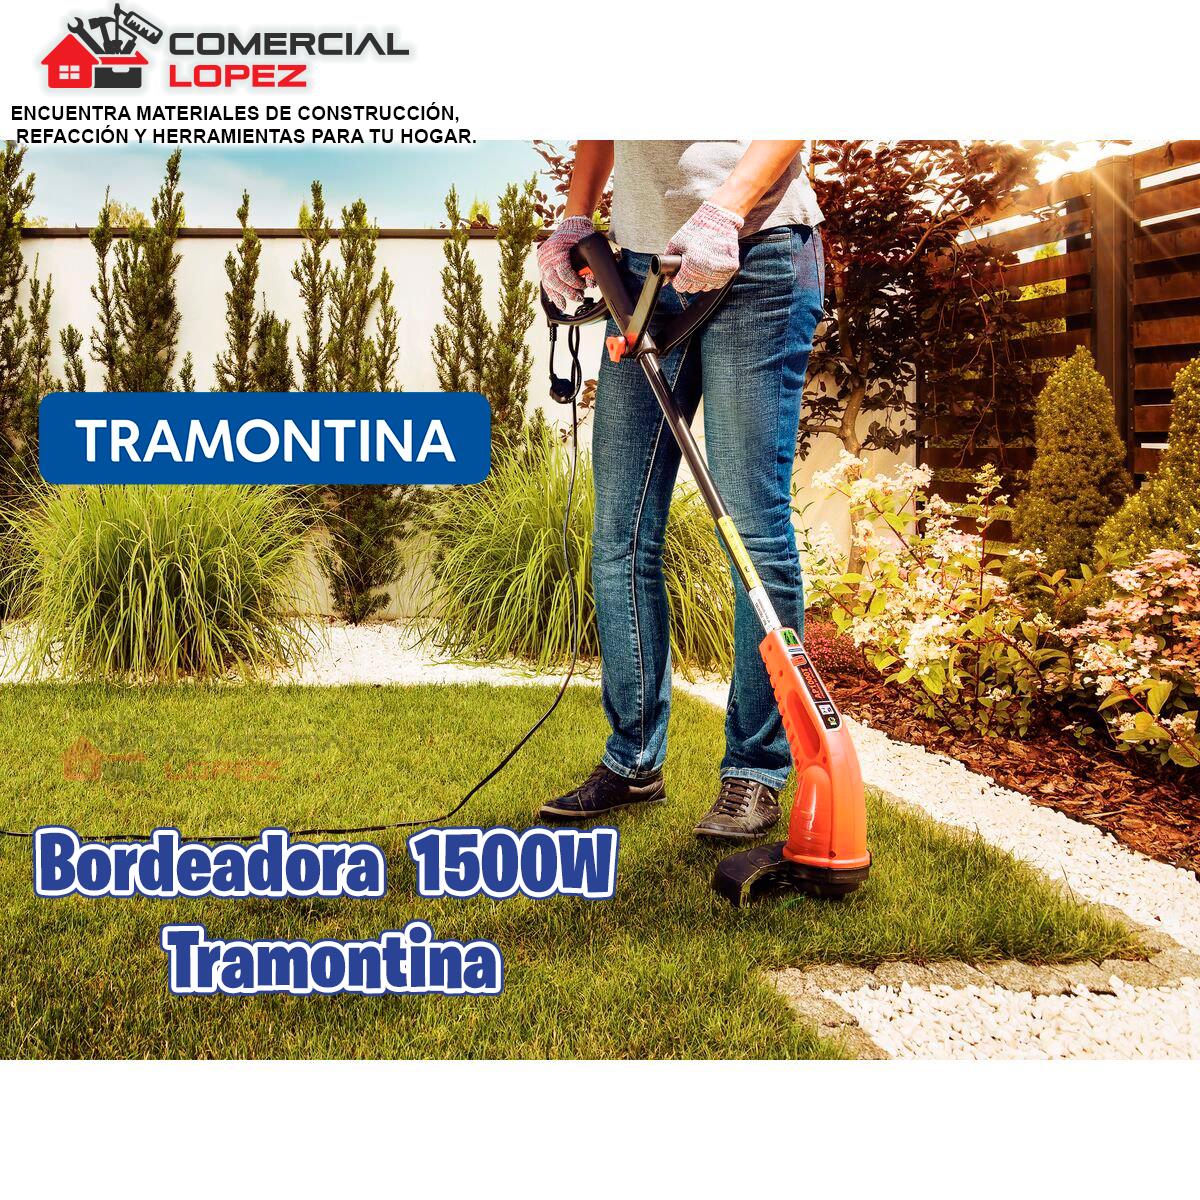 Bordeadora-Tramontina-pagina.jpg